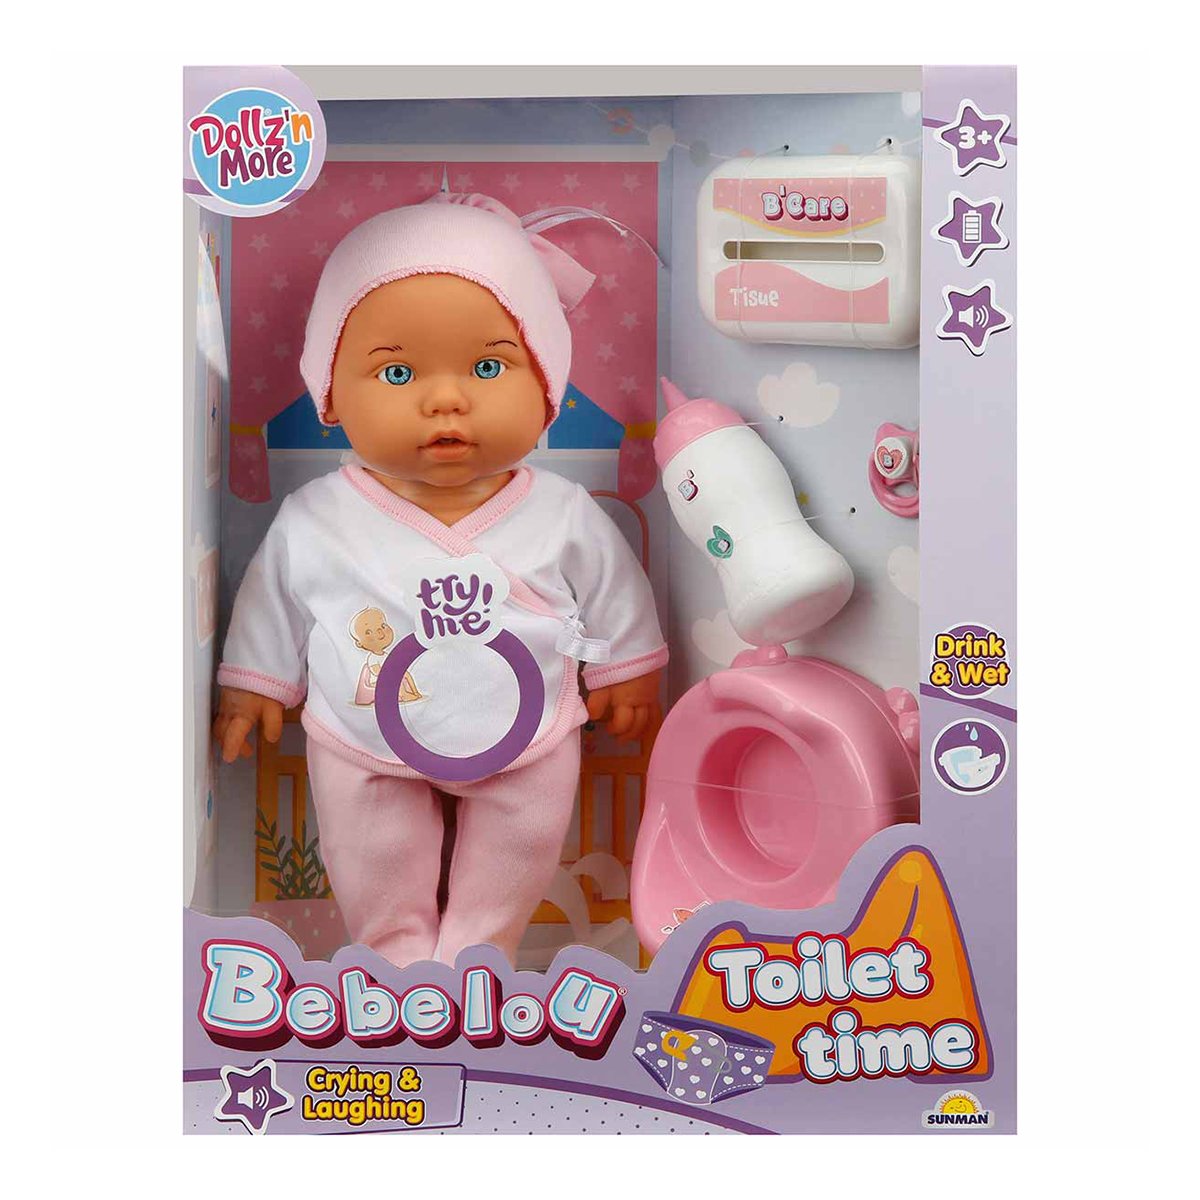 Papusa bebelus Bebelou, Dollzn More, Toilet Time, 35 cm, roz Dollz n More